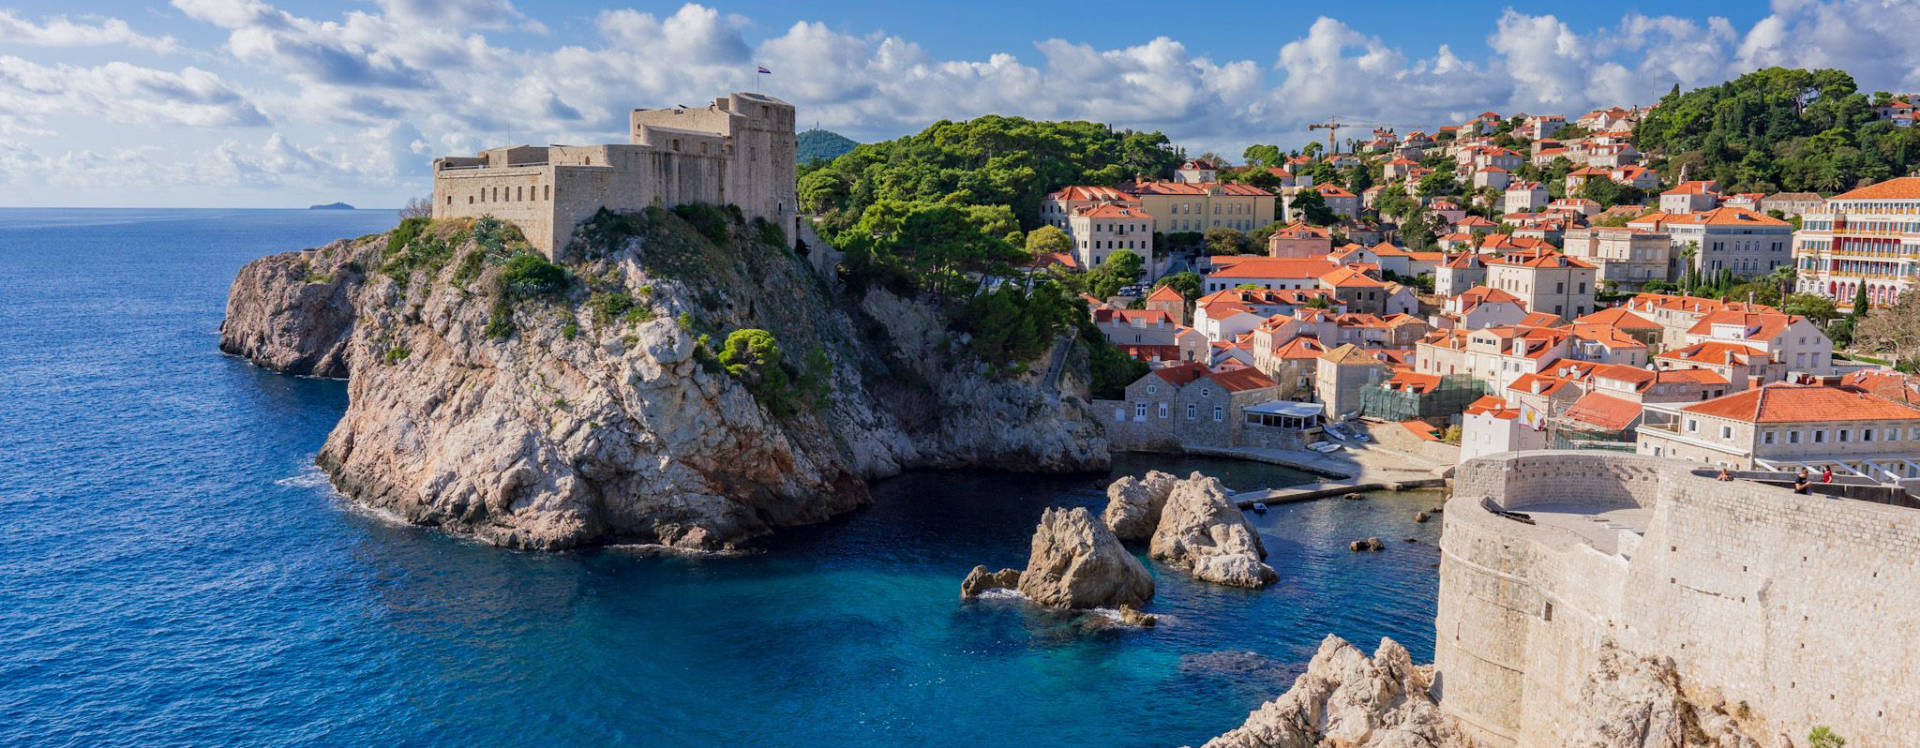 Dubrovnik-Reiss-Reisen-Luxusreisen-Kroatien